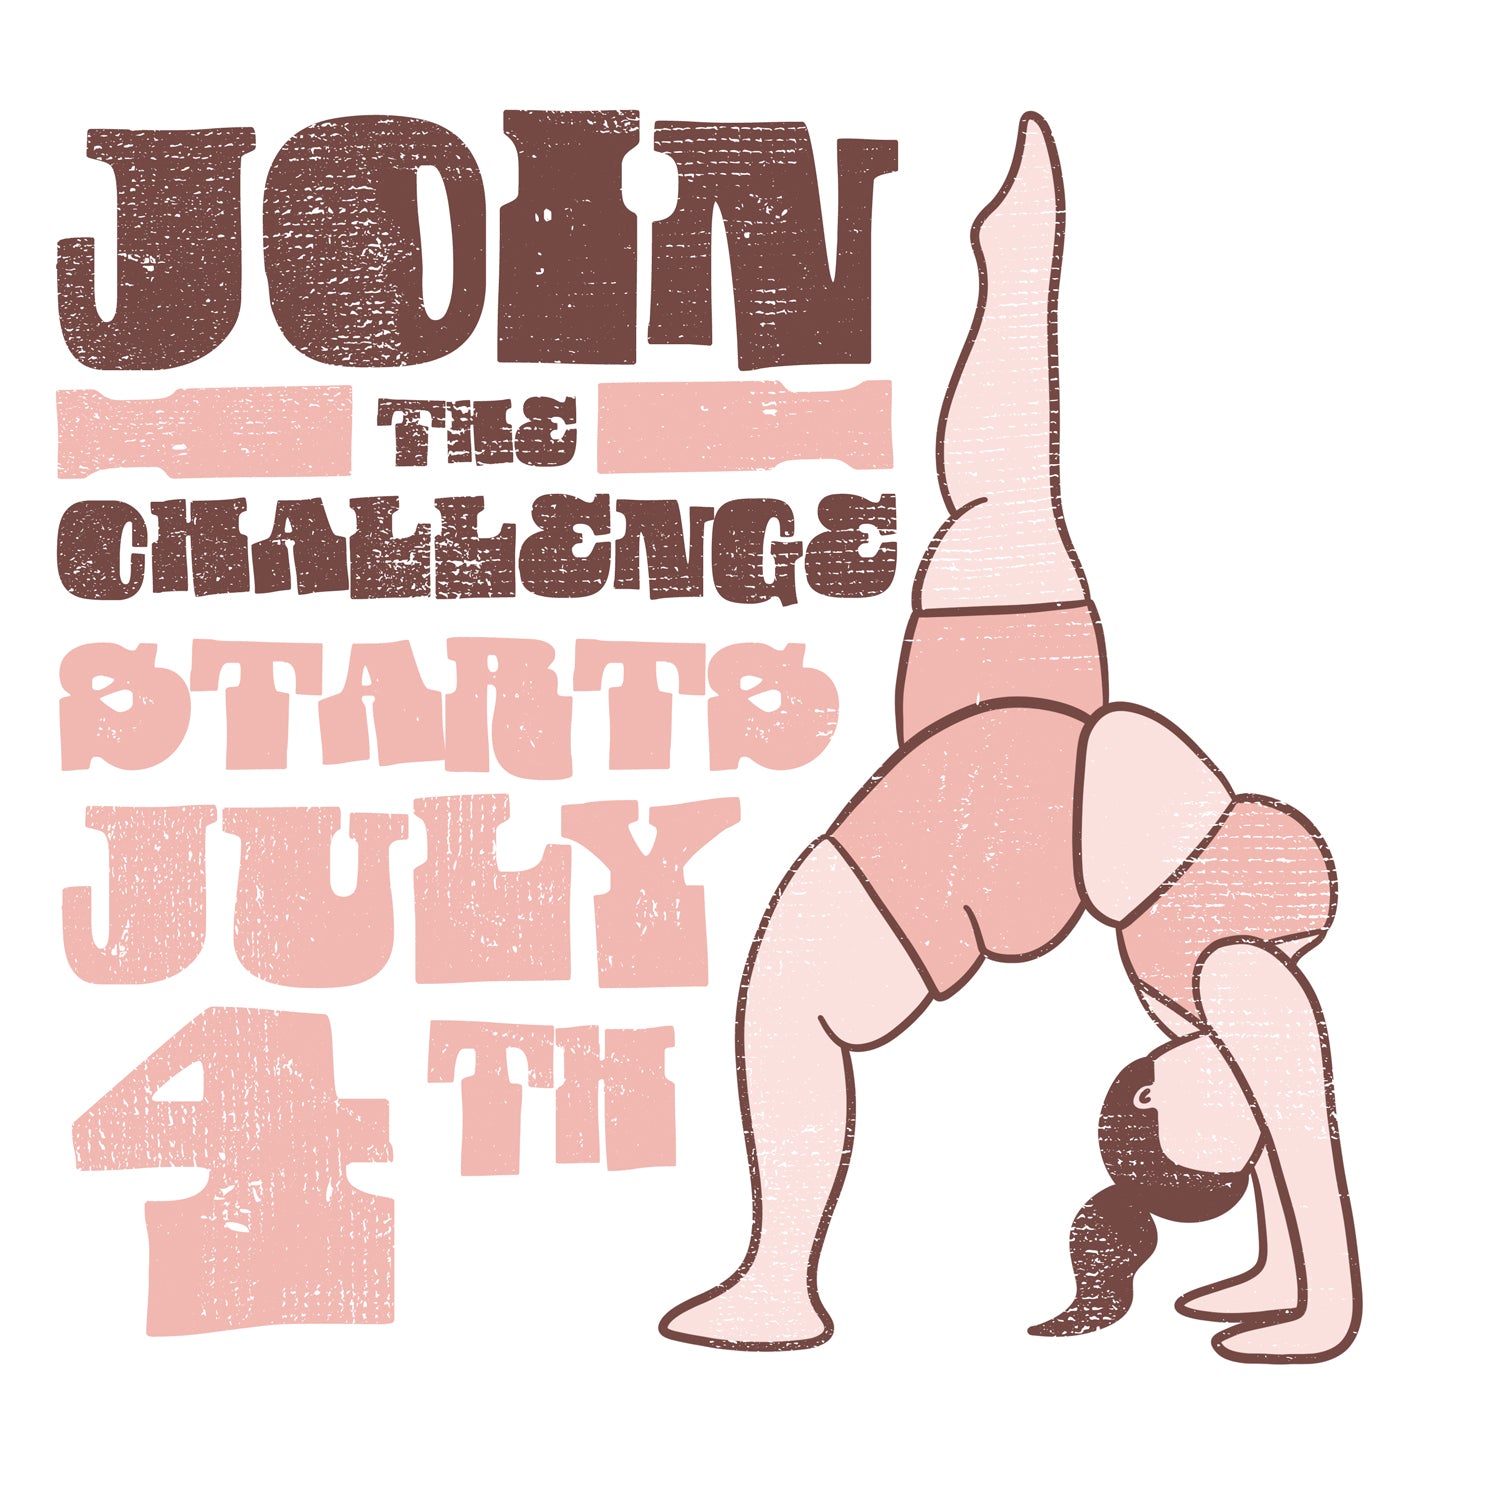 July 4th Challenge